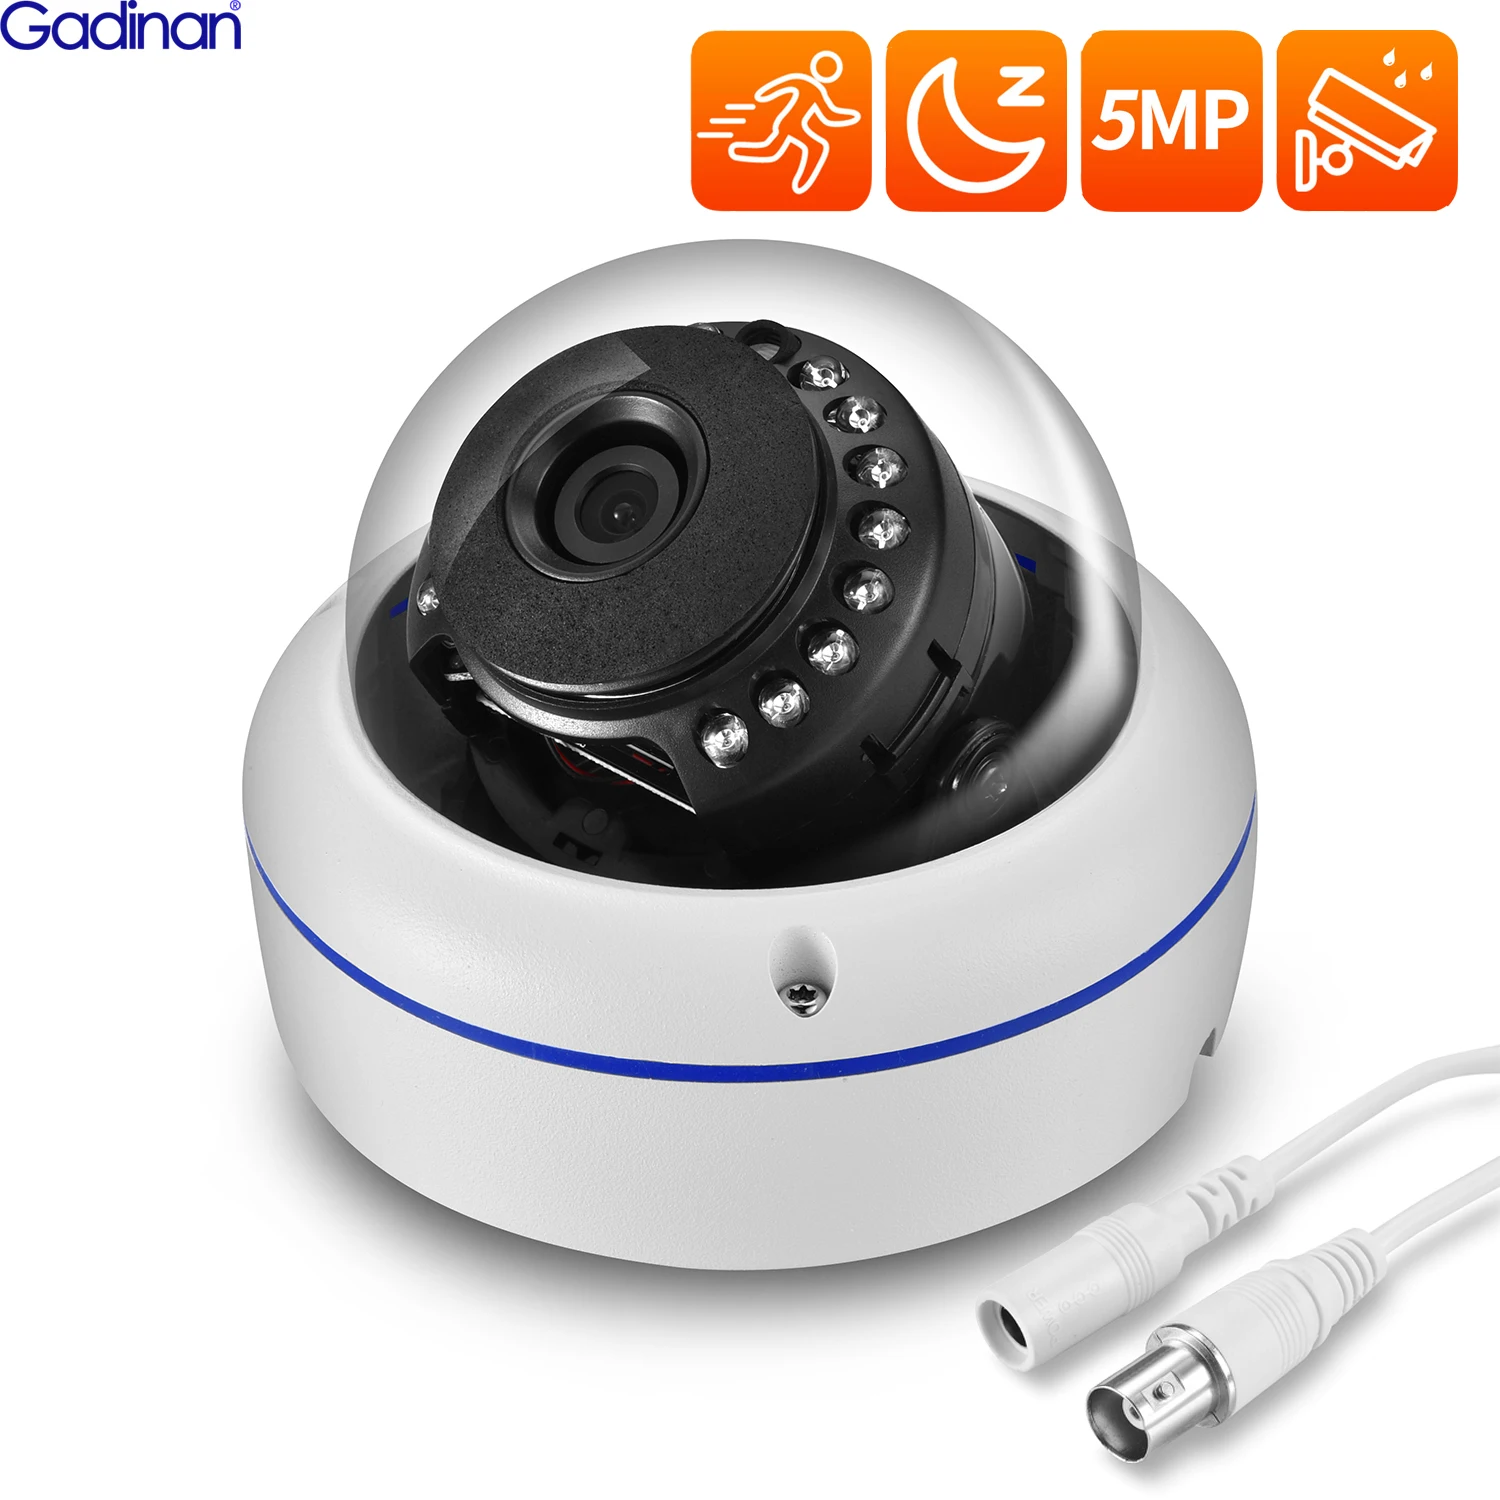 

Gadinan 5MP AHD Camera 1080P 720P 2.8mm lens Vandal-proof Outdoor Indoor Night Vision Surveillance BNC Dome AHD CCTV Camera